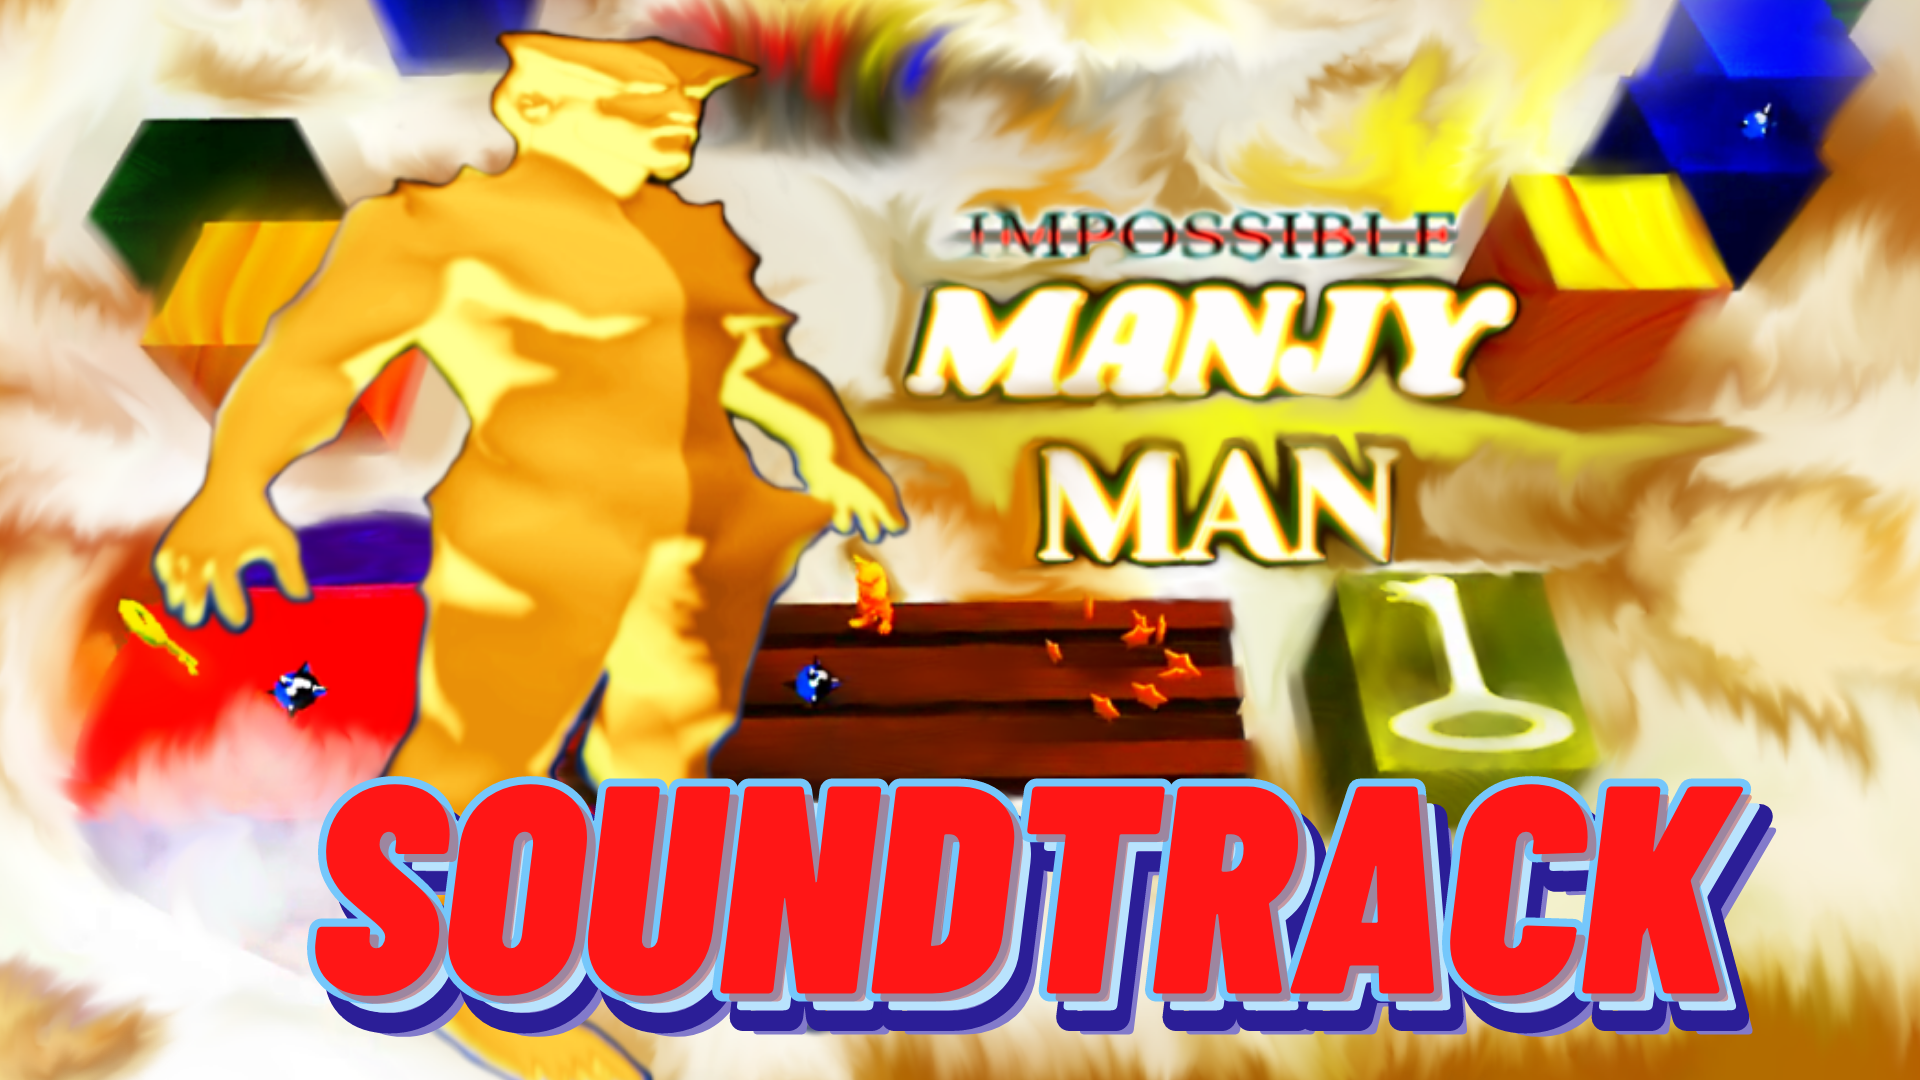 SOUNDTRACK - Impossible Manjy Man